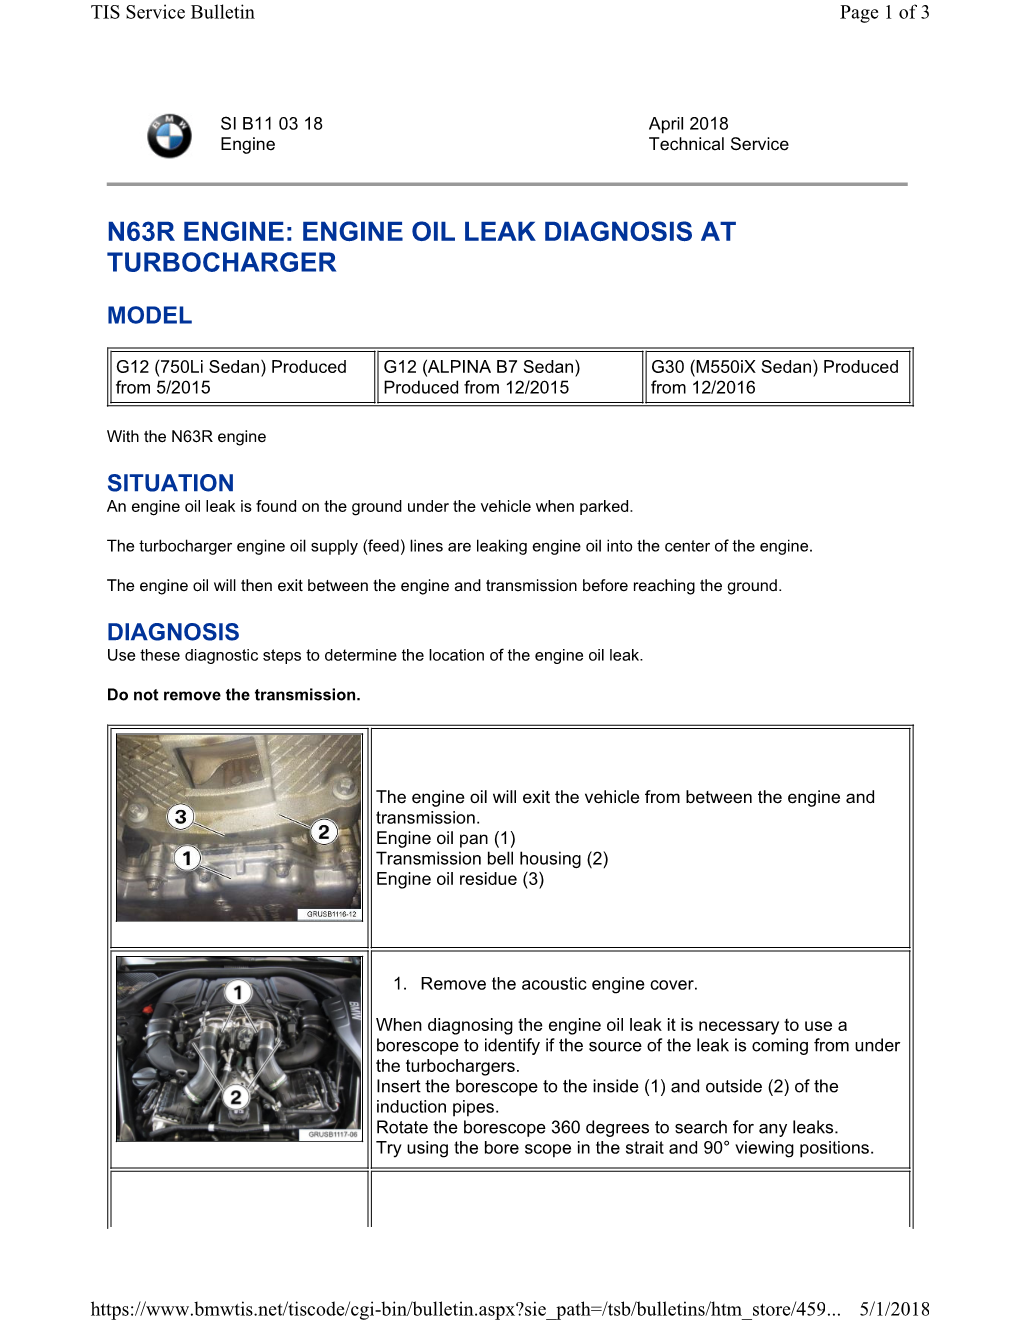 Engine Oil Leak Diagnosis at Turbocharger